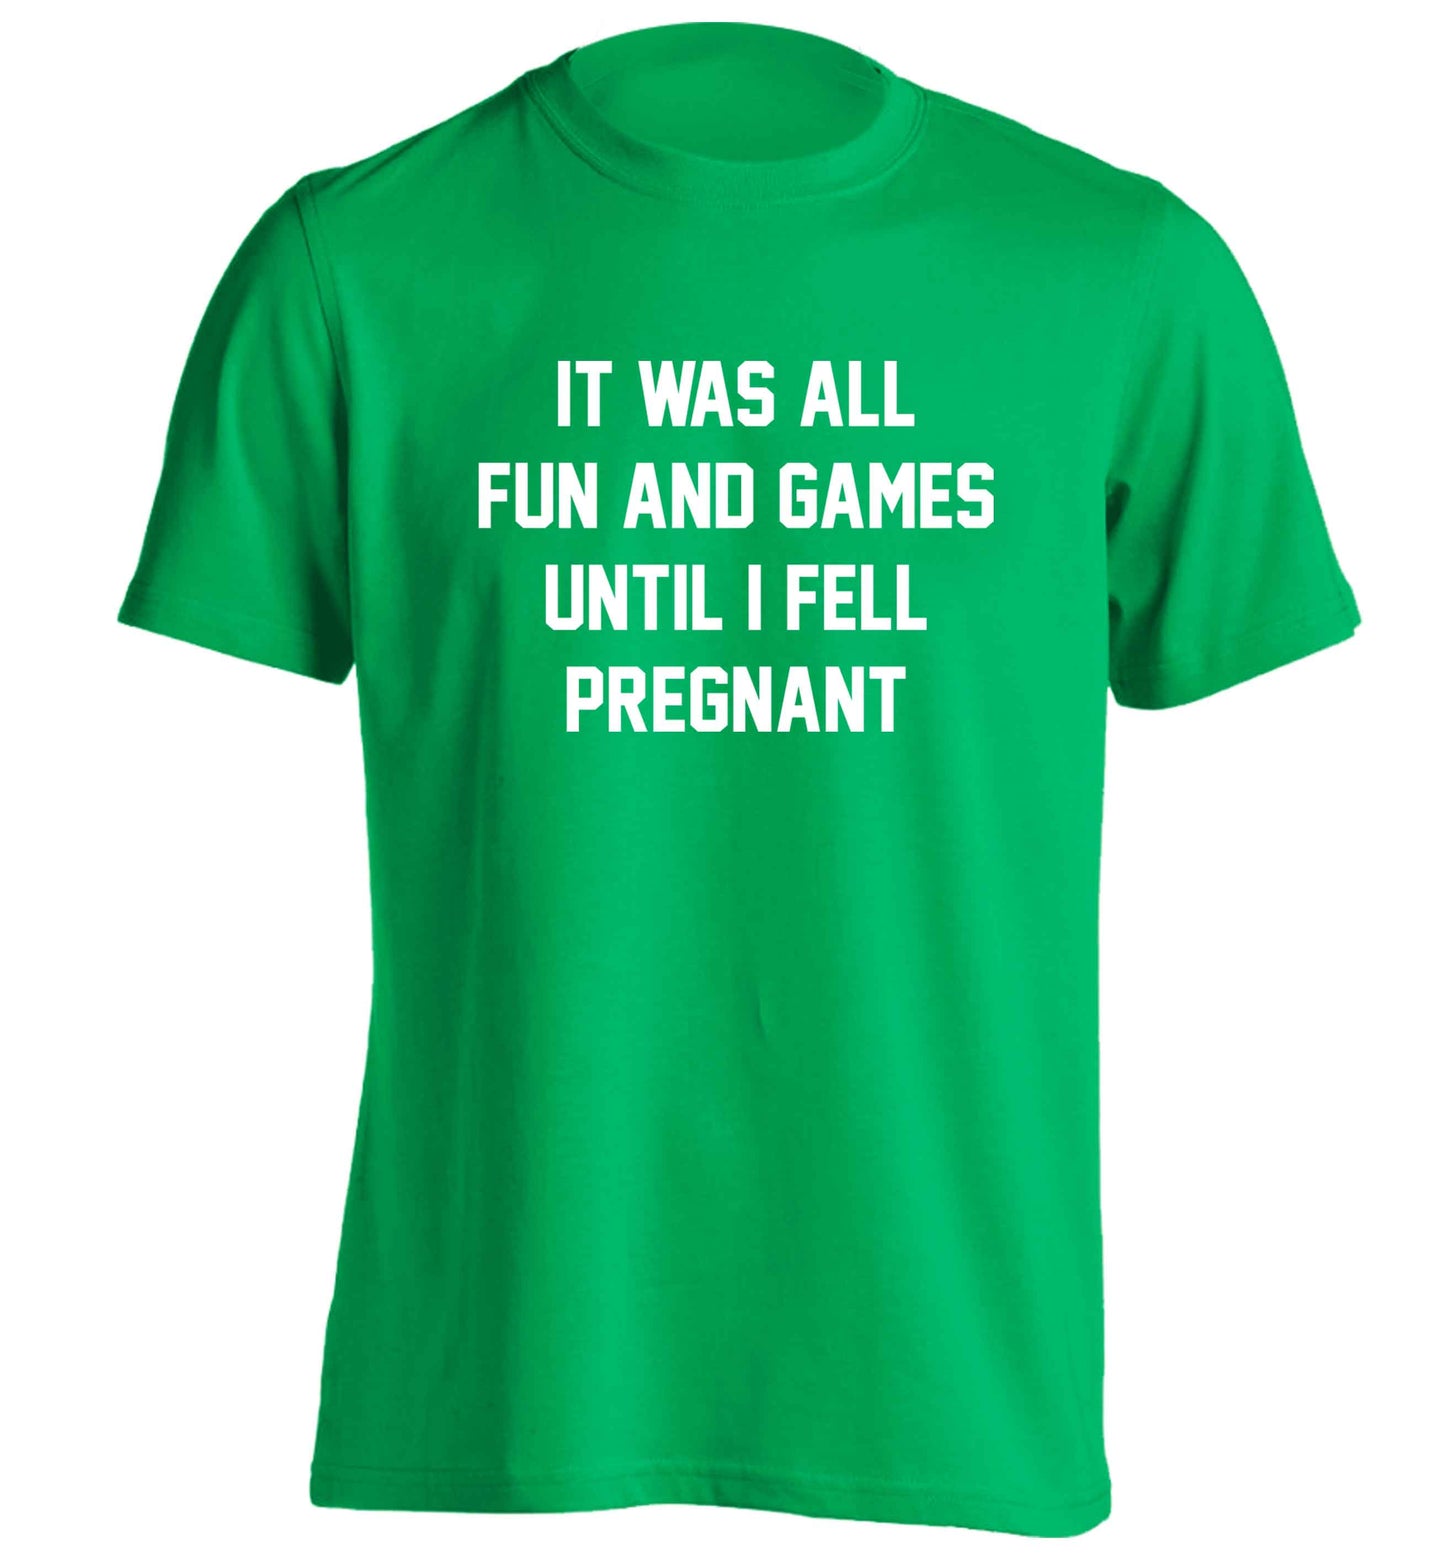 It was all fun and games until I fell pregnant kicks adults unisex green Tshirt 2XL